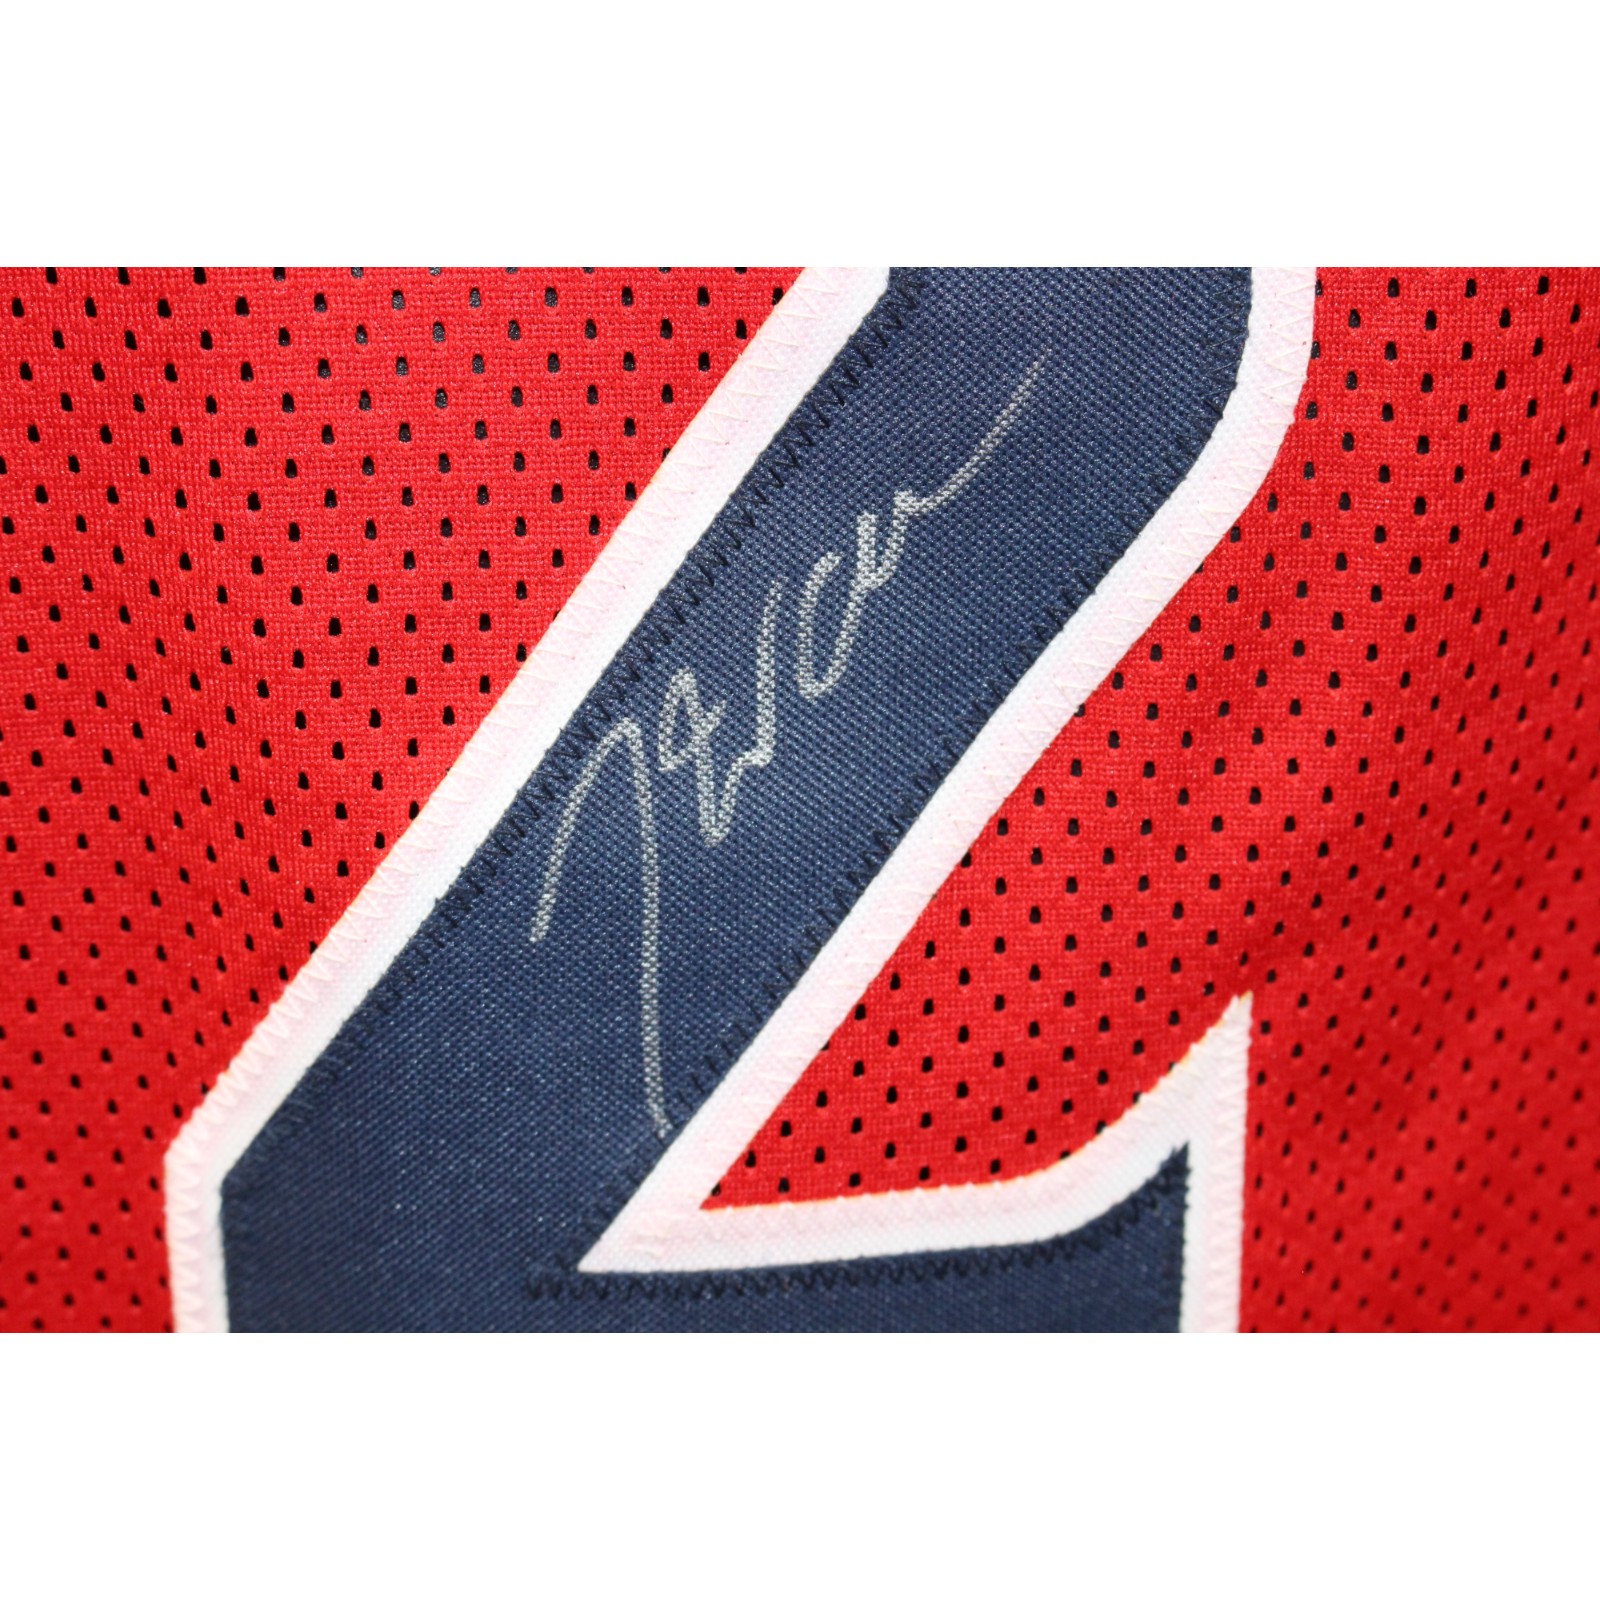 John Wall Autographed/Signed Pro Style Red Jersey JSA